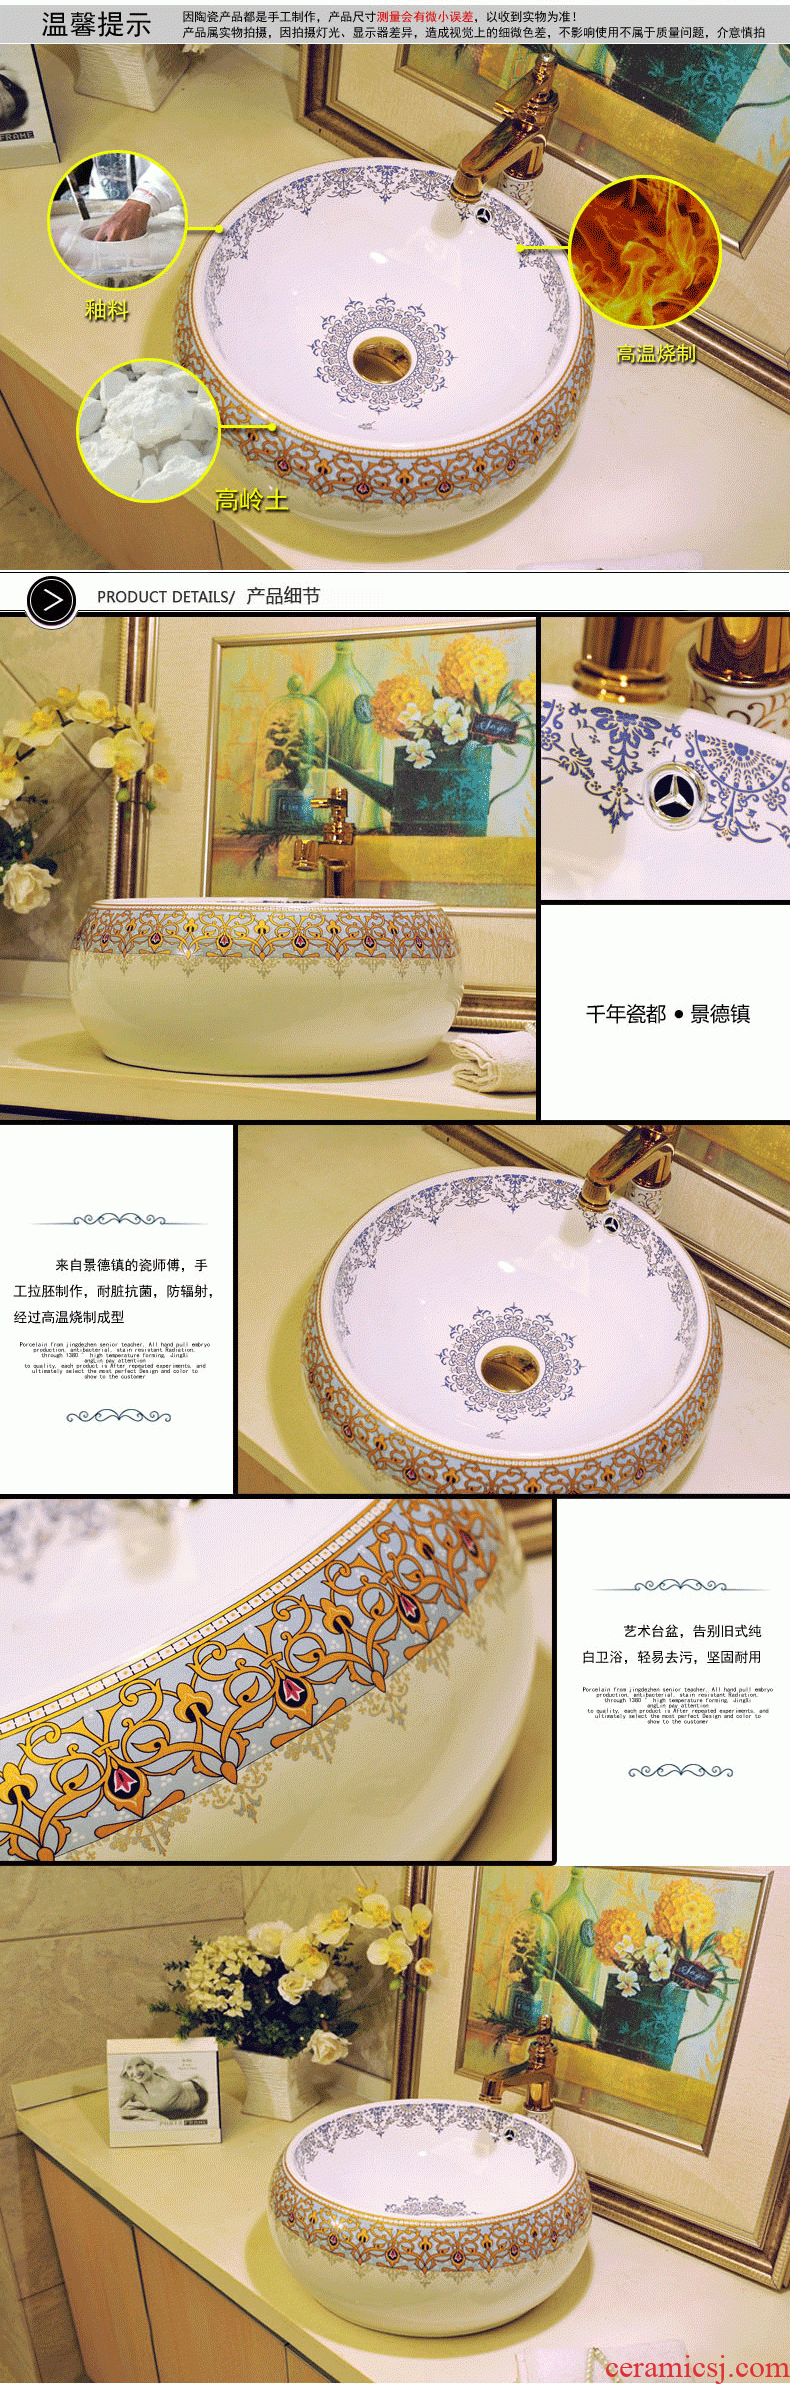 Stage basin ceramic art pattern the basin that wash a toilet lavabo, european-style circular lavatory basin spillway hole